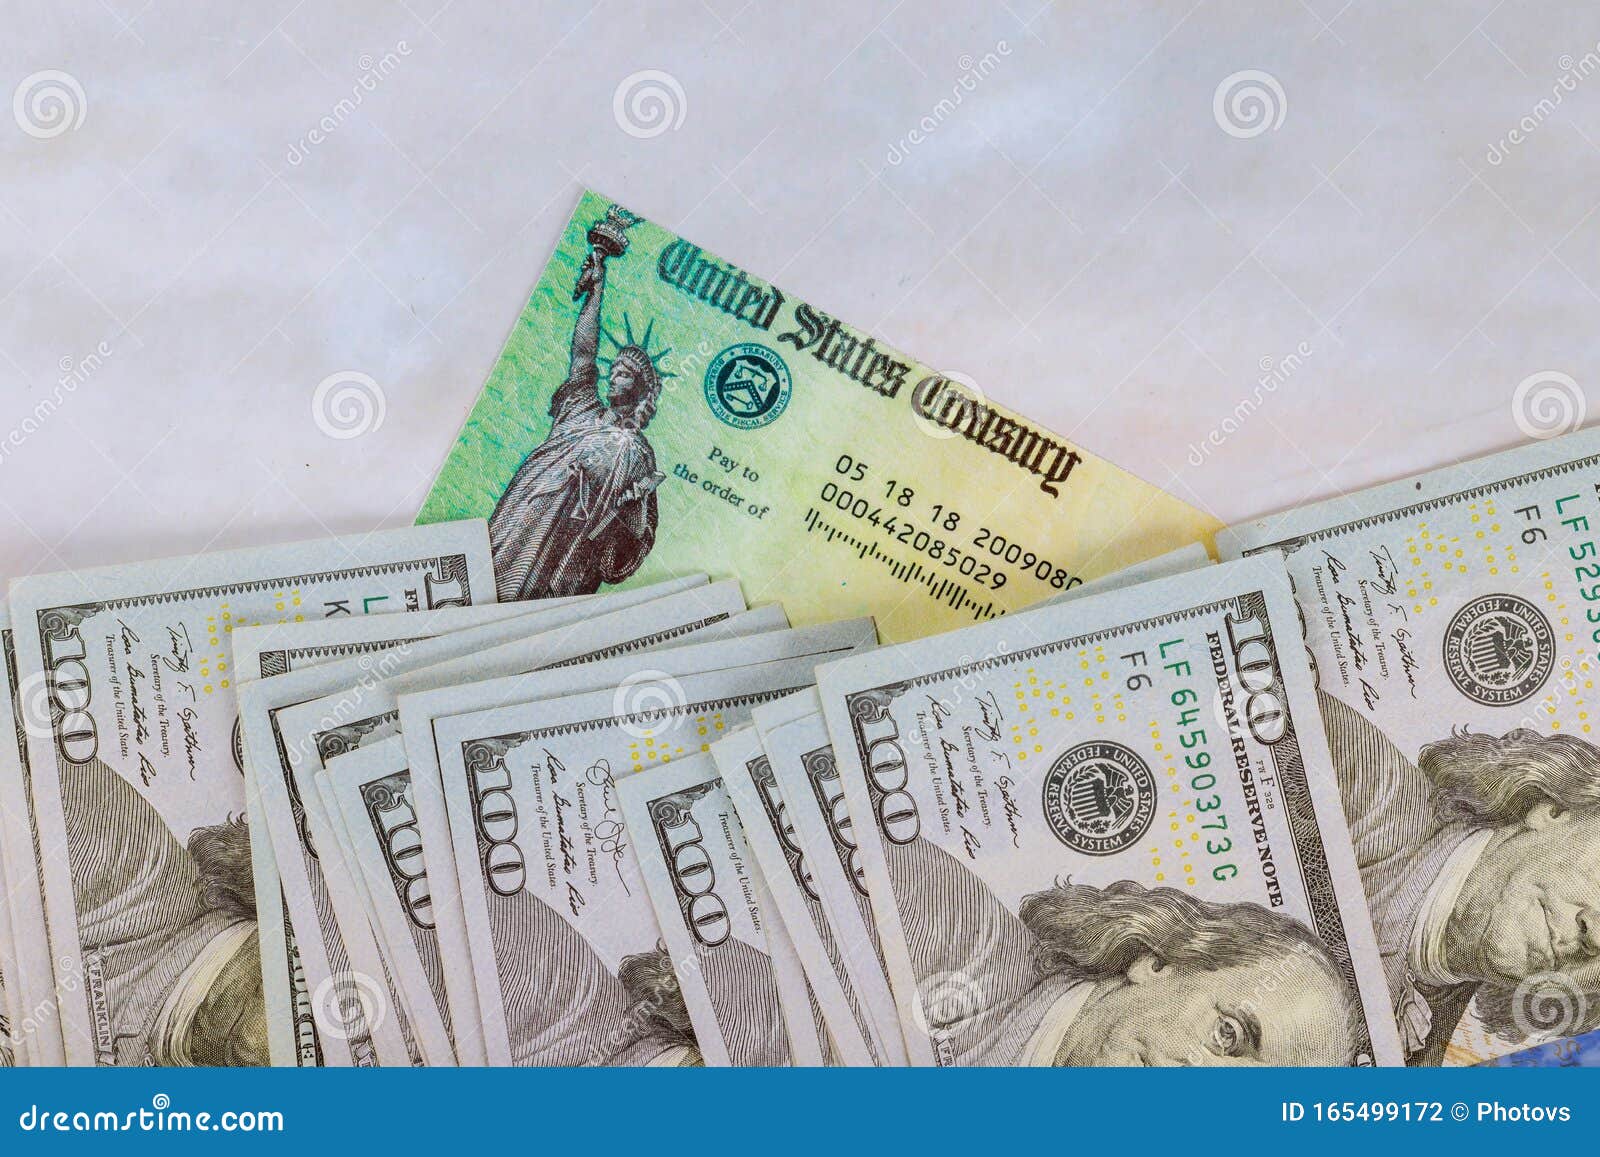 1040 u.s. individual income tax return, stimulus economic tax return check and usa currency hundred us dollar bills